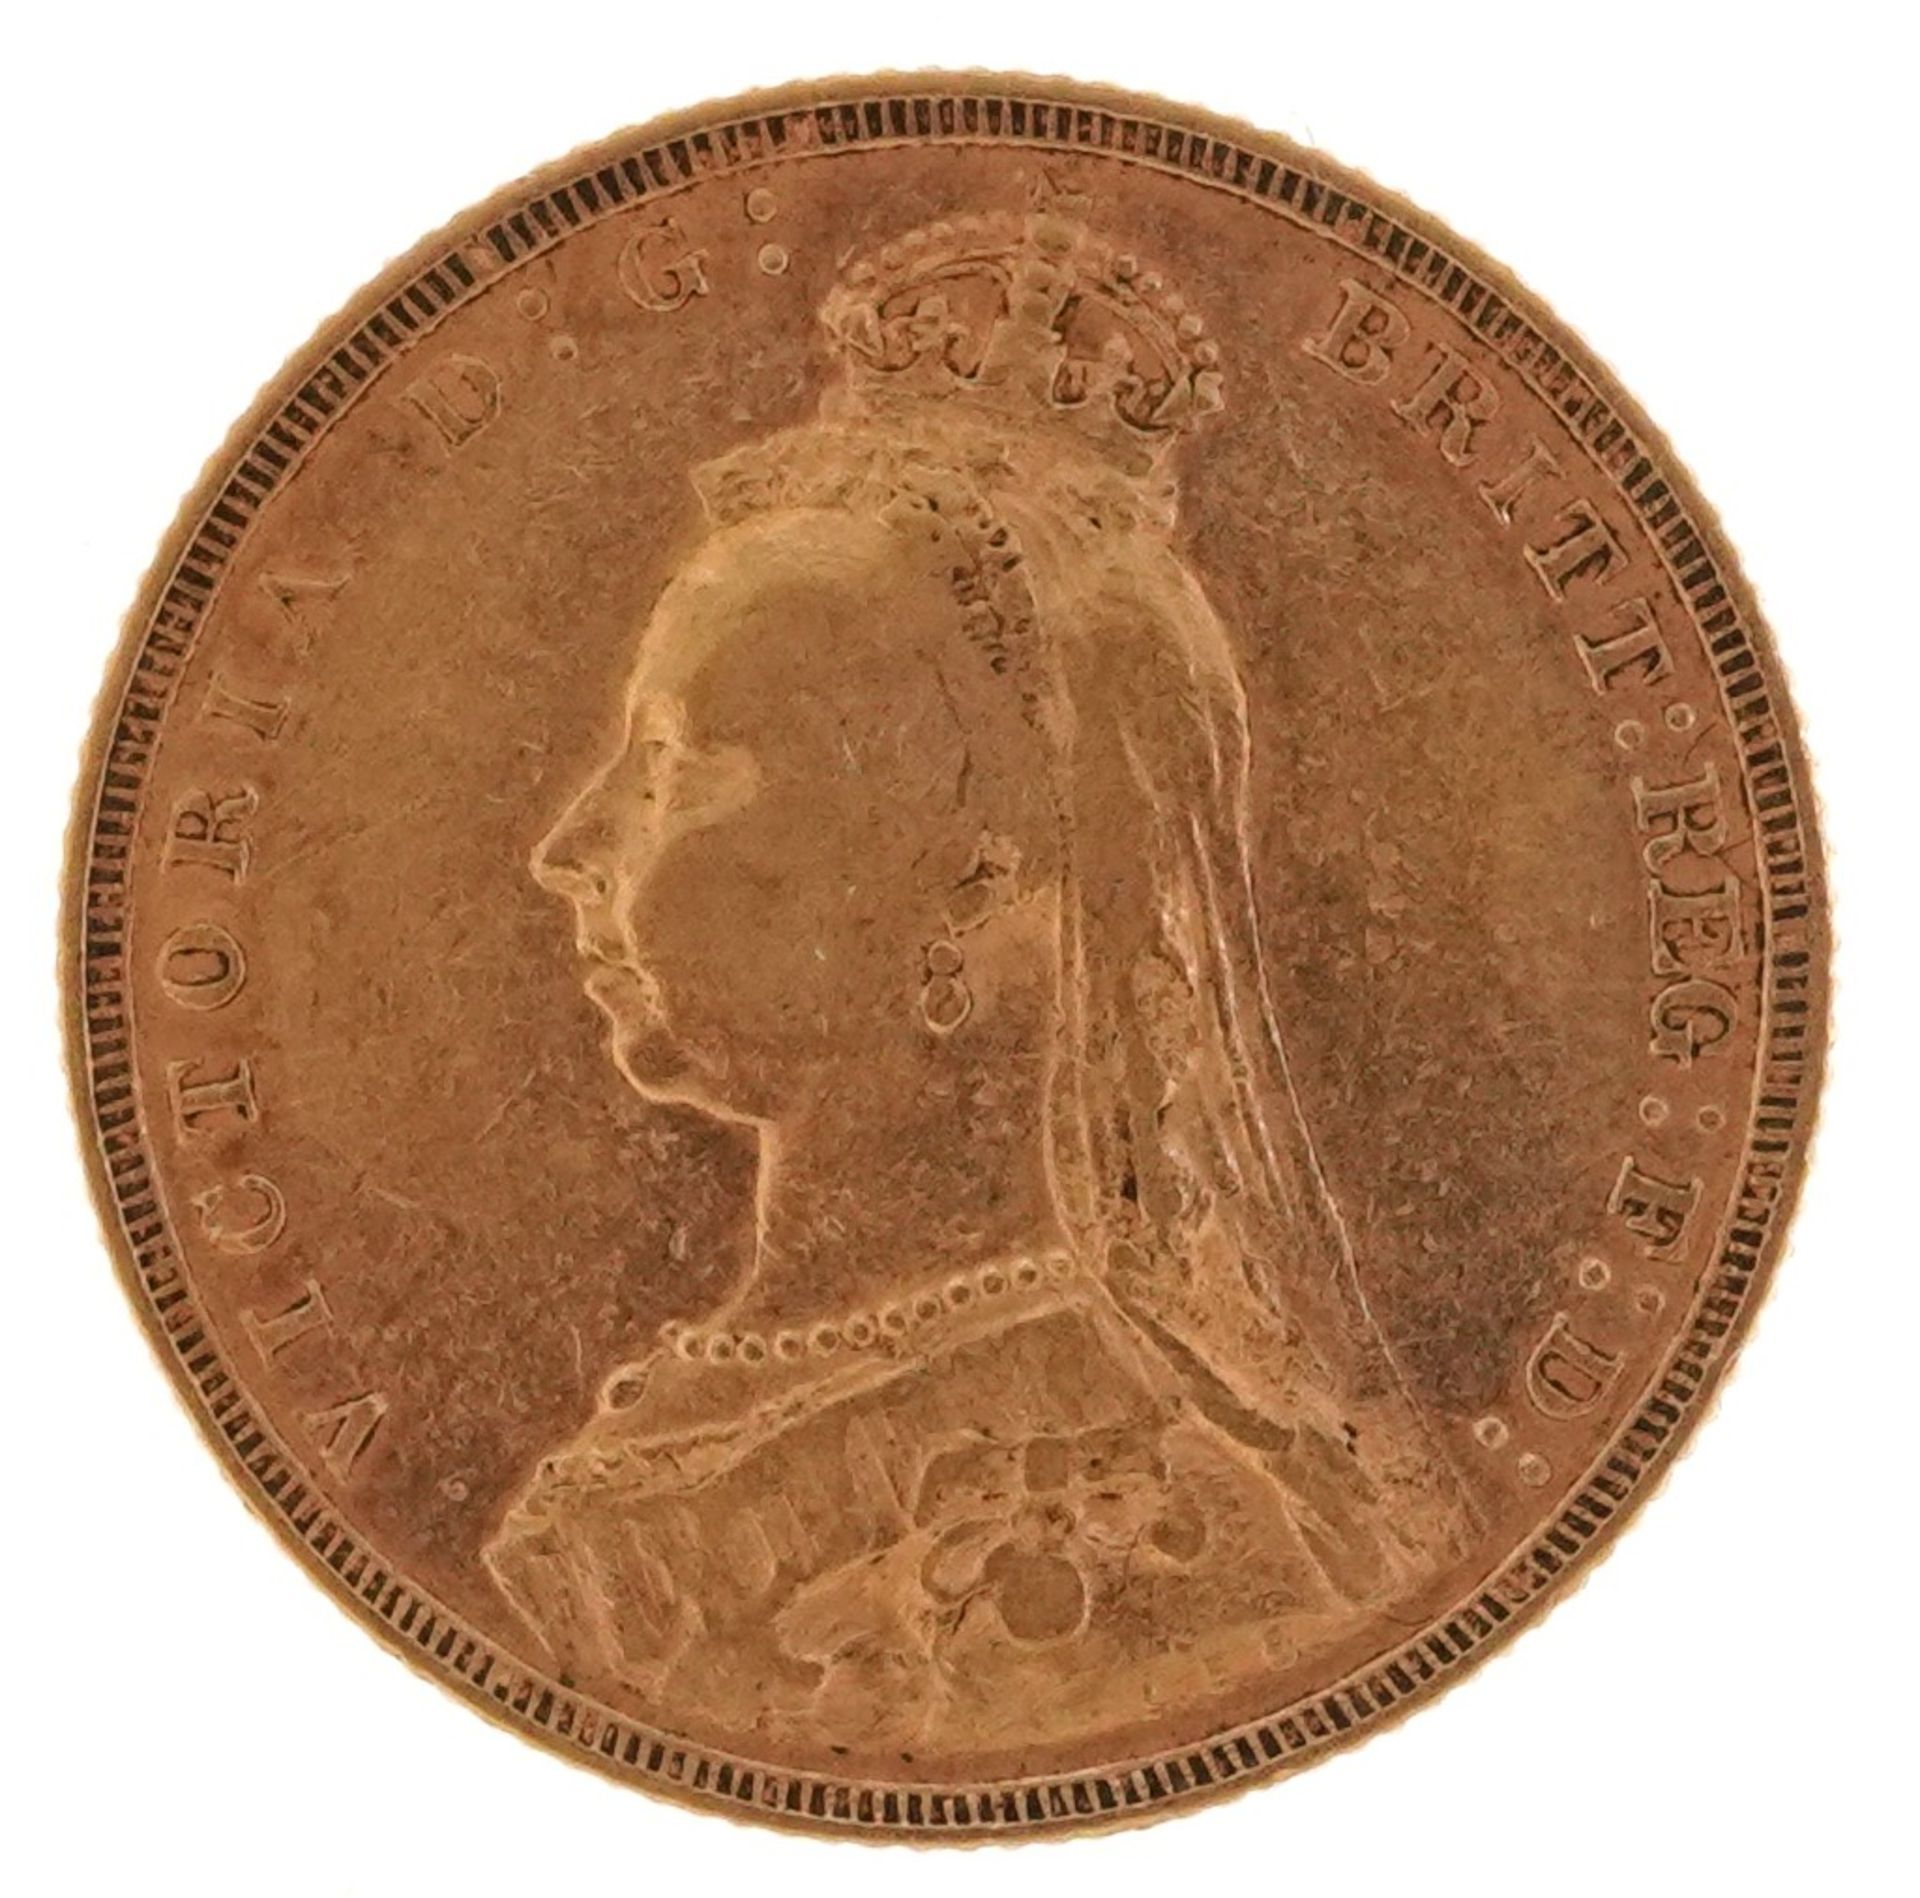 Queen Victoria Jubilee Head 1889 gold sovereign - Image 2 of 3